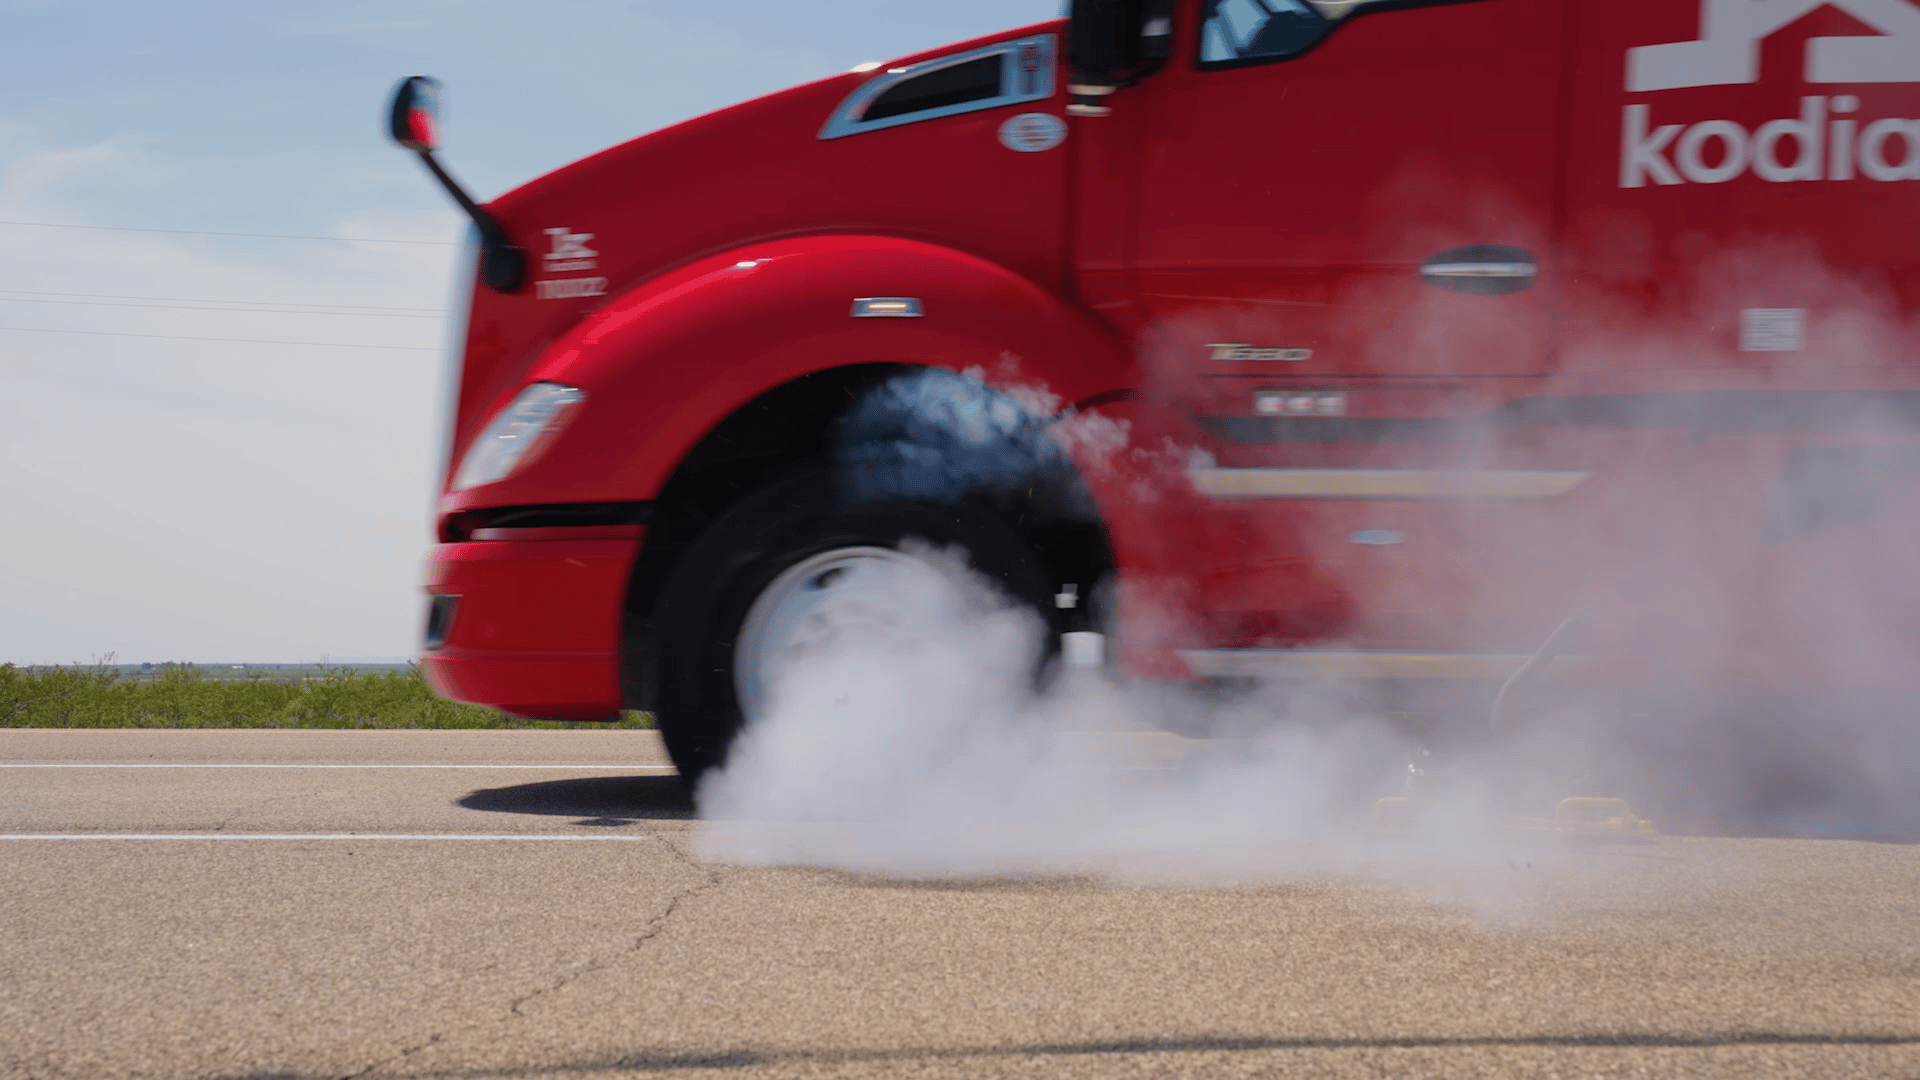 Kodiak Robotics Demonstrates Tire Blowout on its Self-Driving Truck